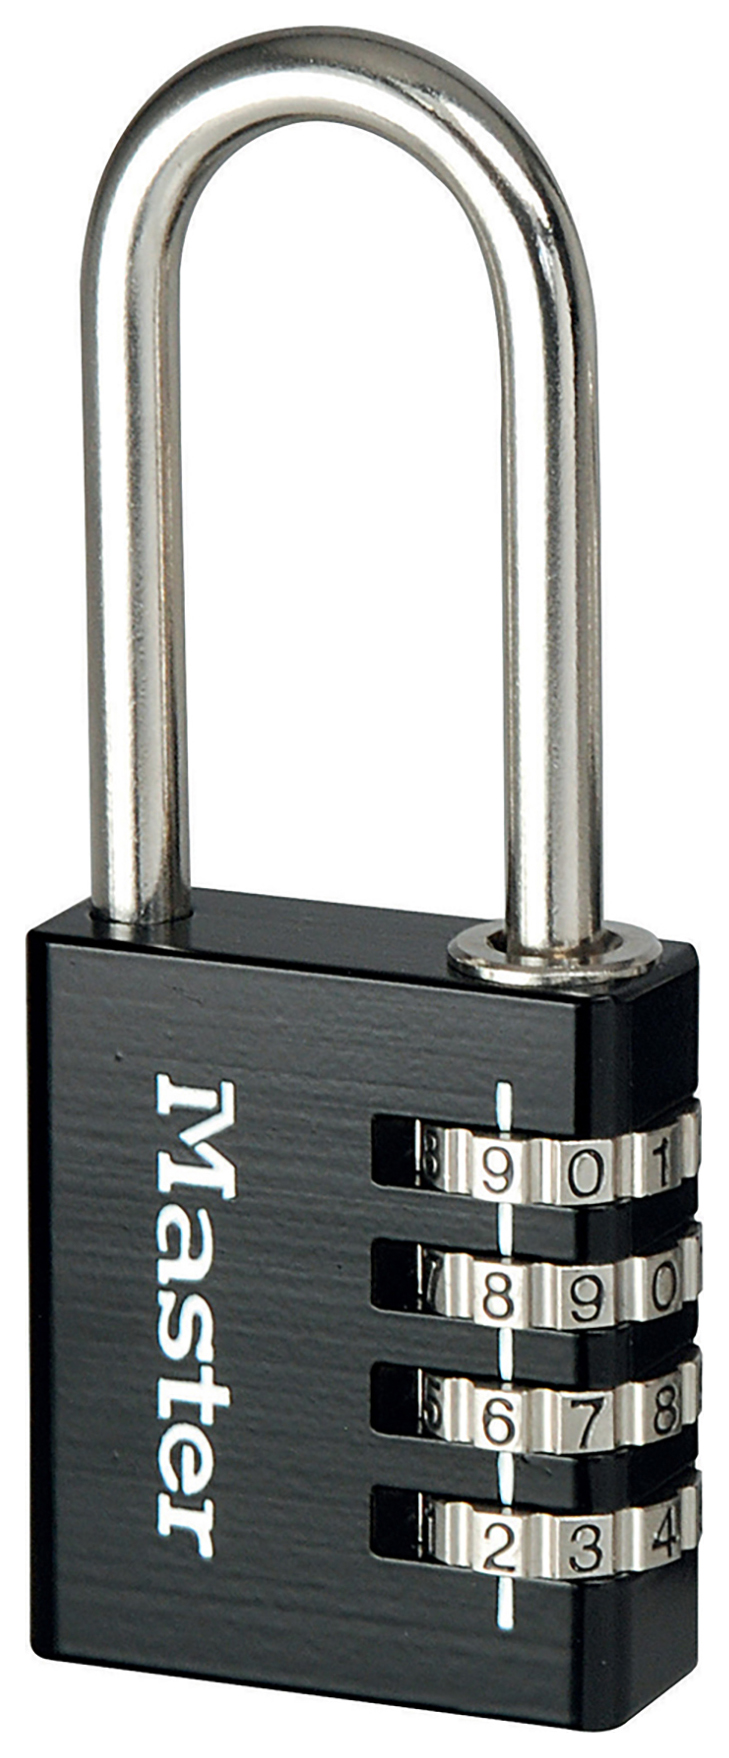 Image of Master Lock Combination Padlock with Long Shackle - Black